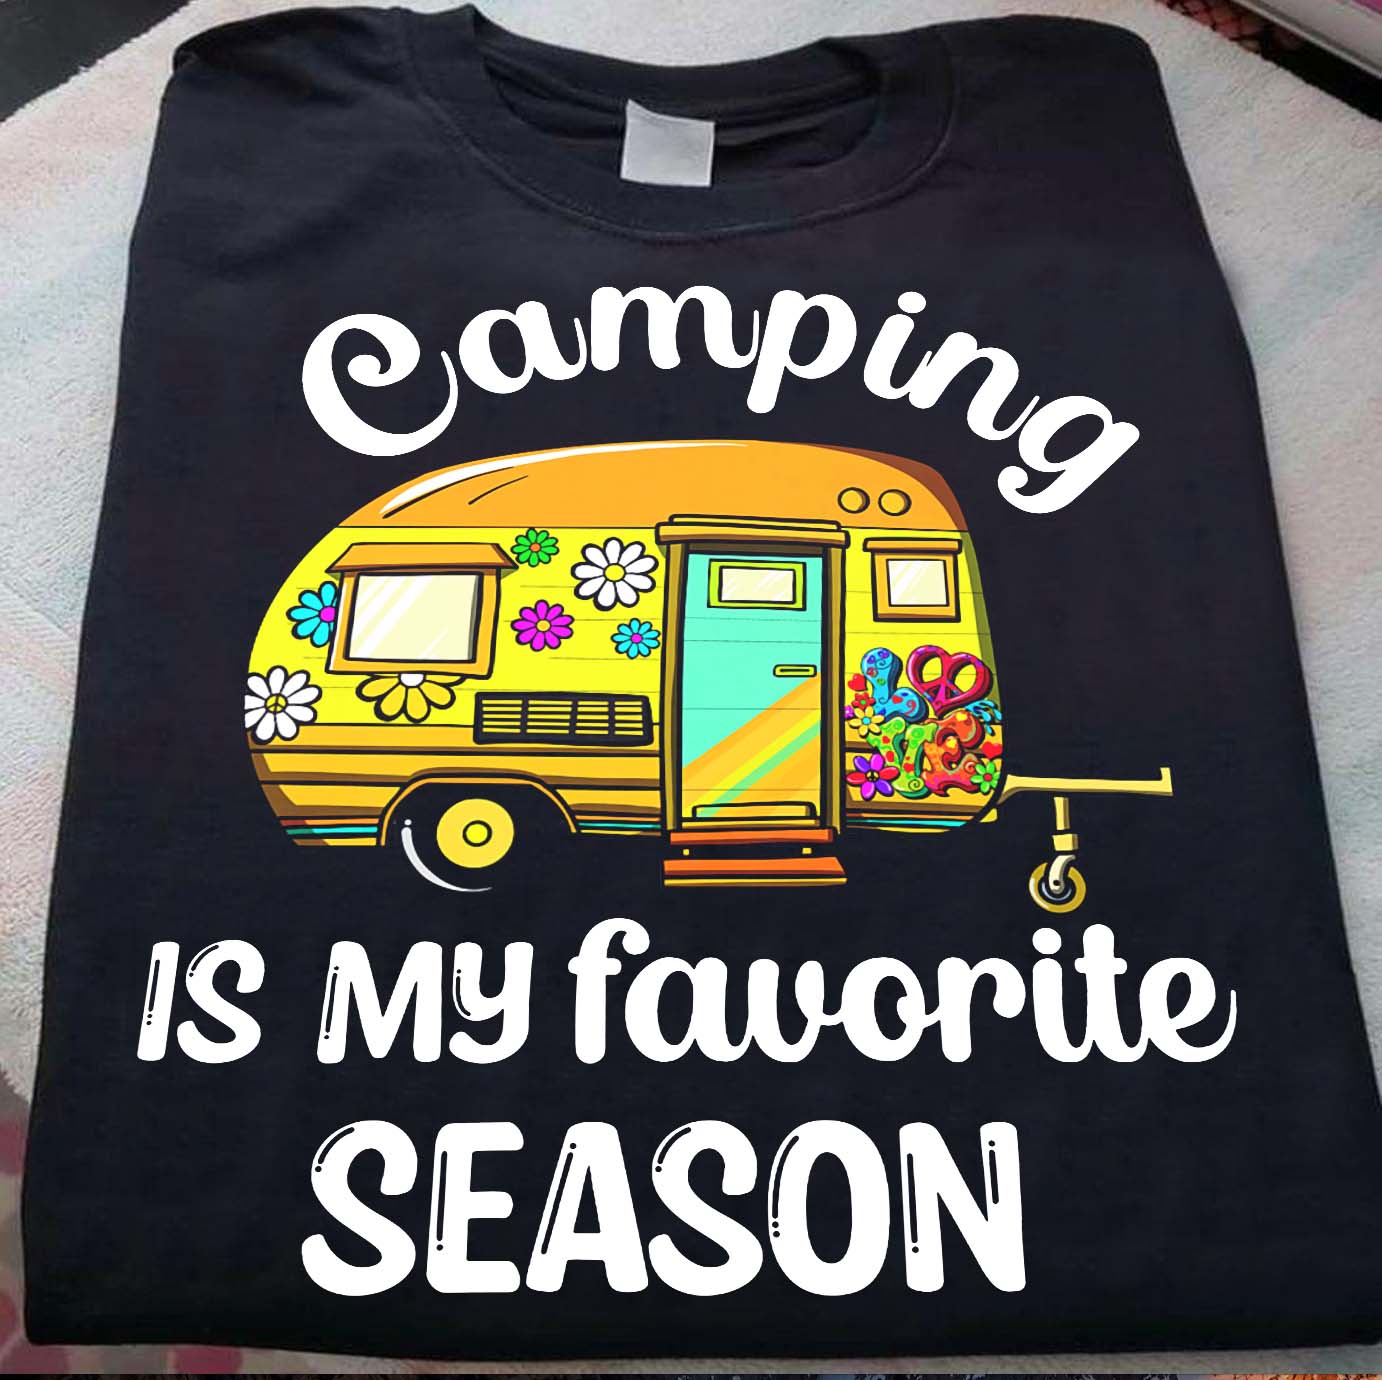 Camping is my favorite season - Camping car, camping lover